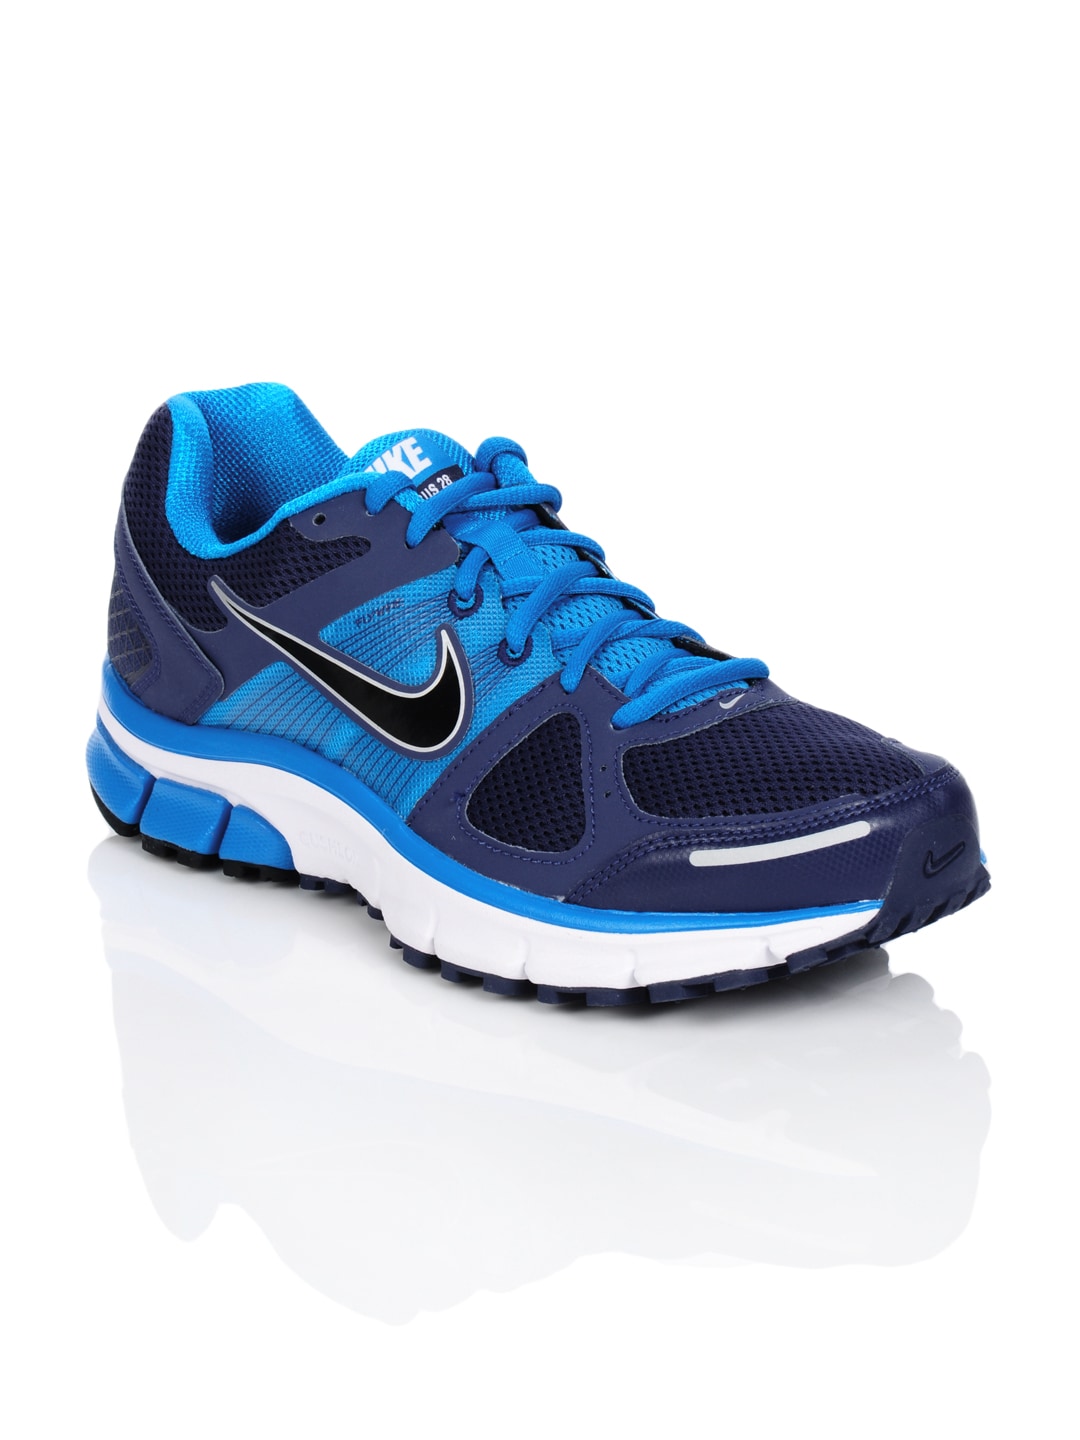 Nike Men Air Pegasus Blue Sports Shoes